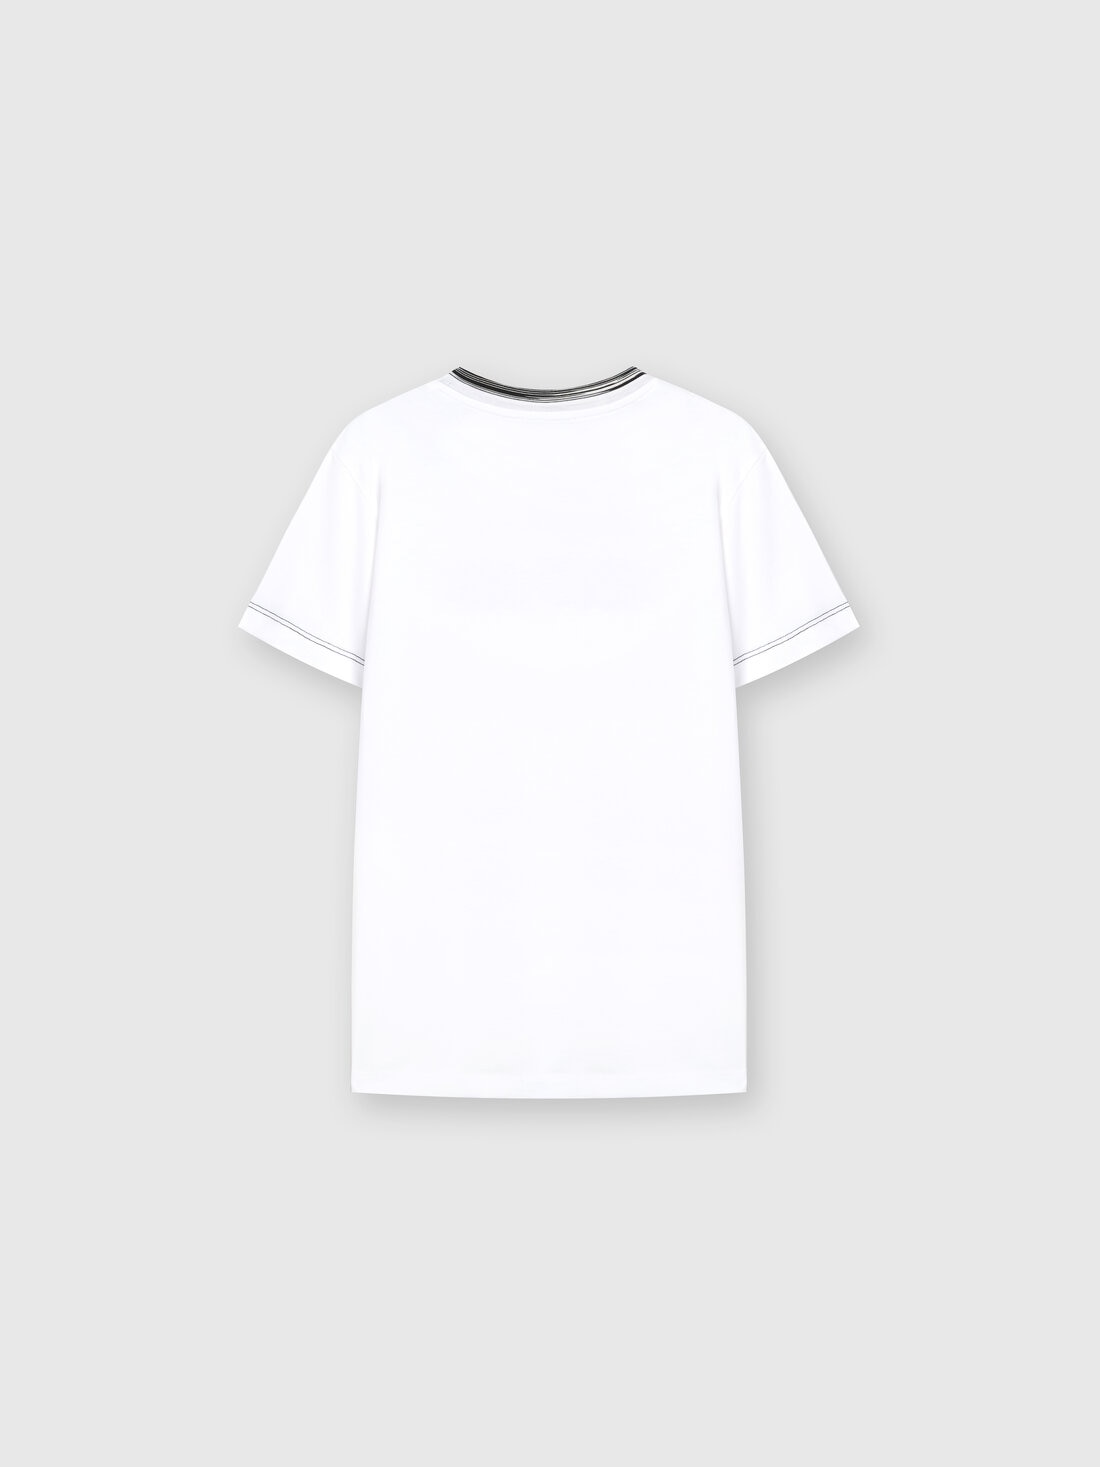 Cotton jersey T-shirt with logo, Black & White - KS24SL05BV00FWSM92N - 1